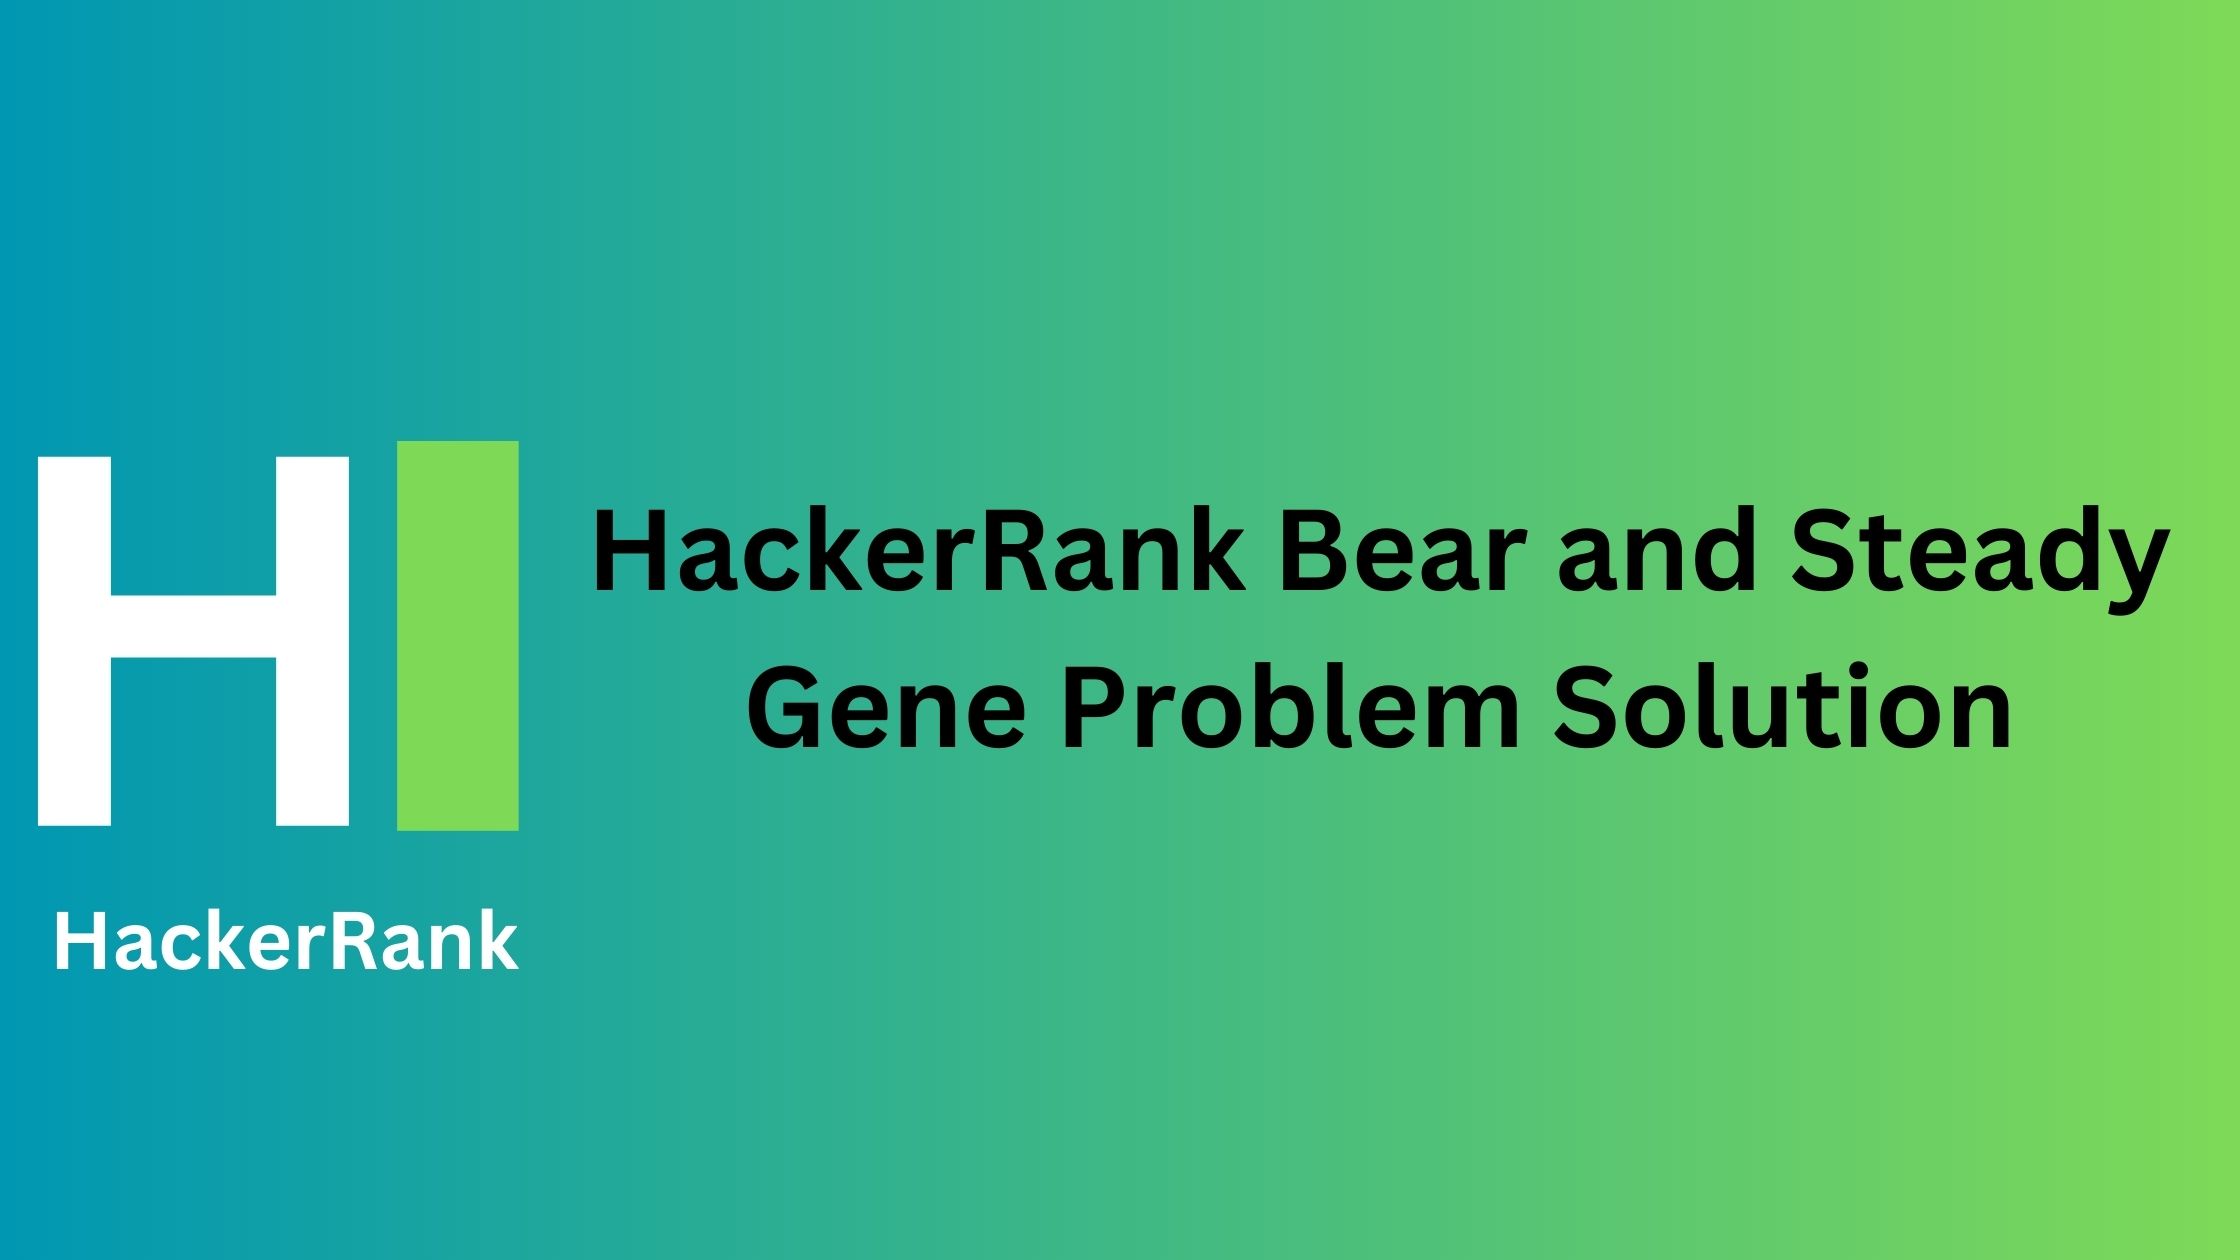 HackerRank Bear and Steady Gene Problem Solution